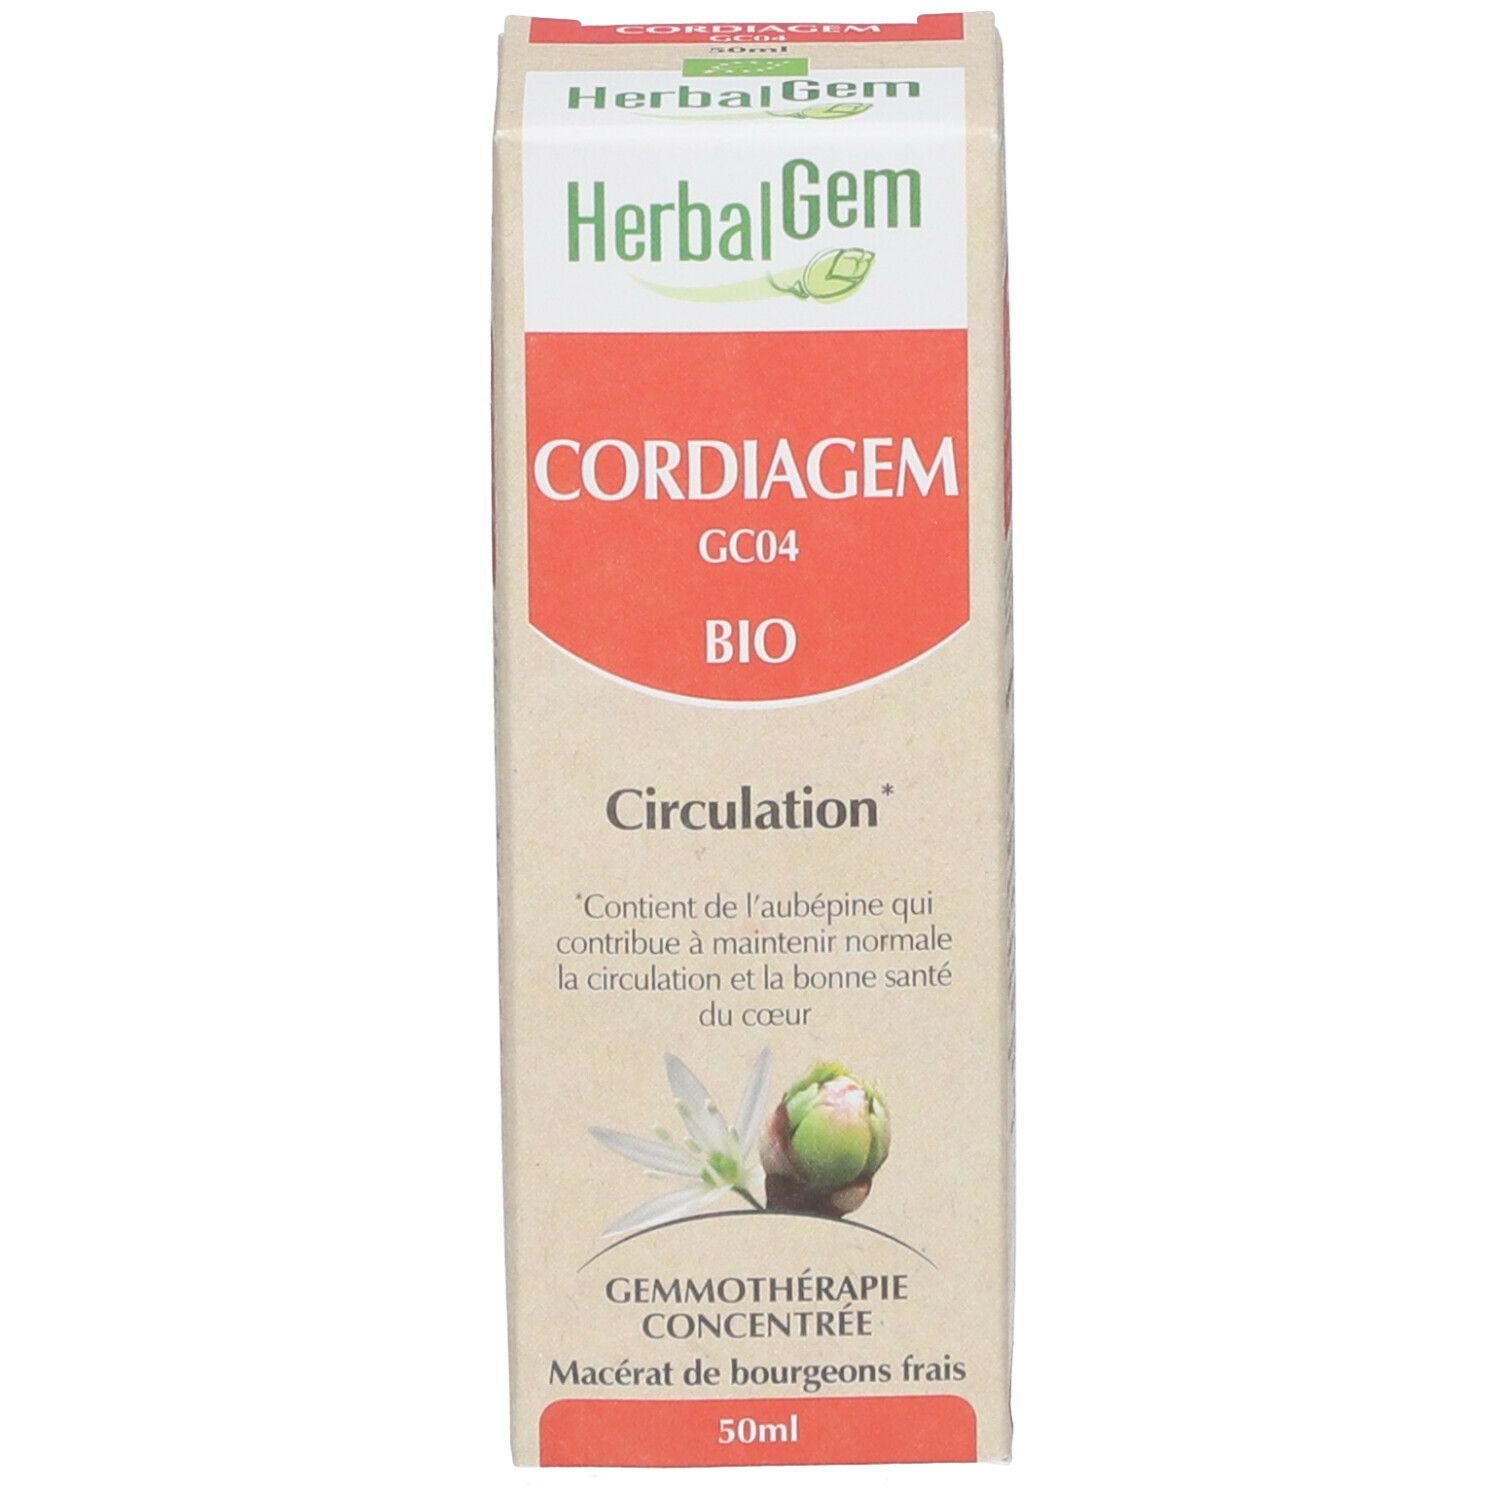 HerbalGem Cordiagem